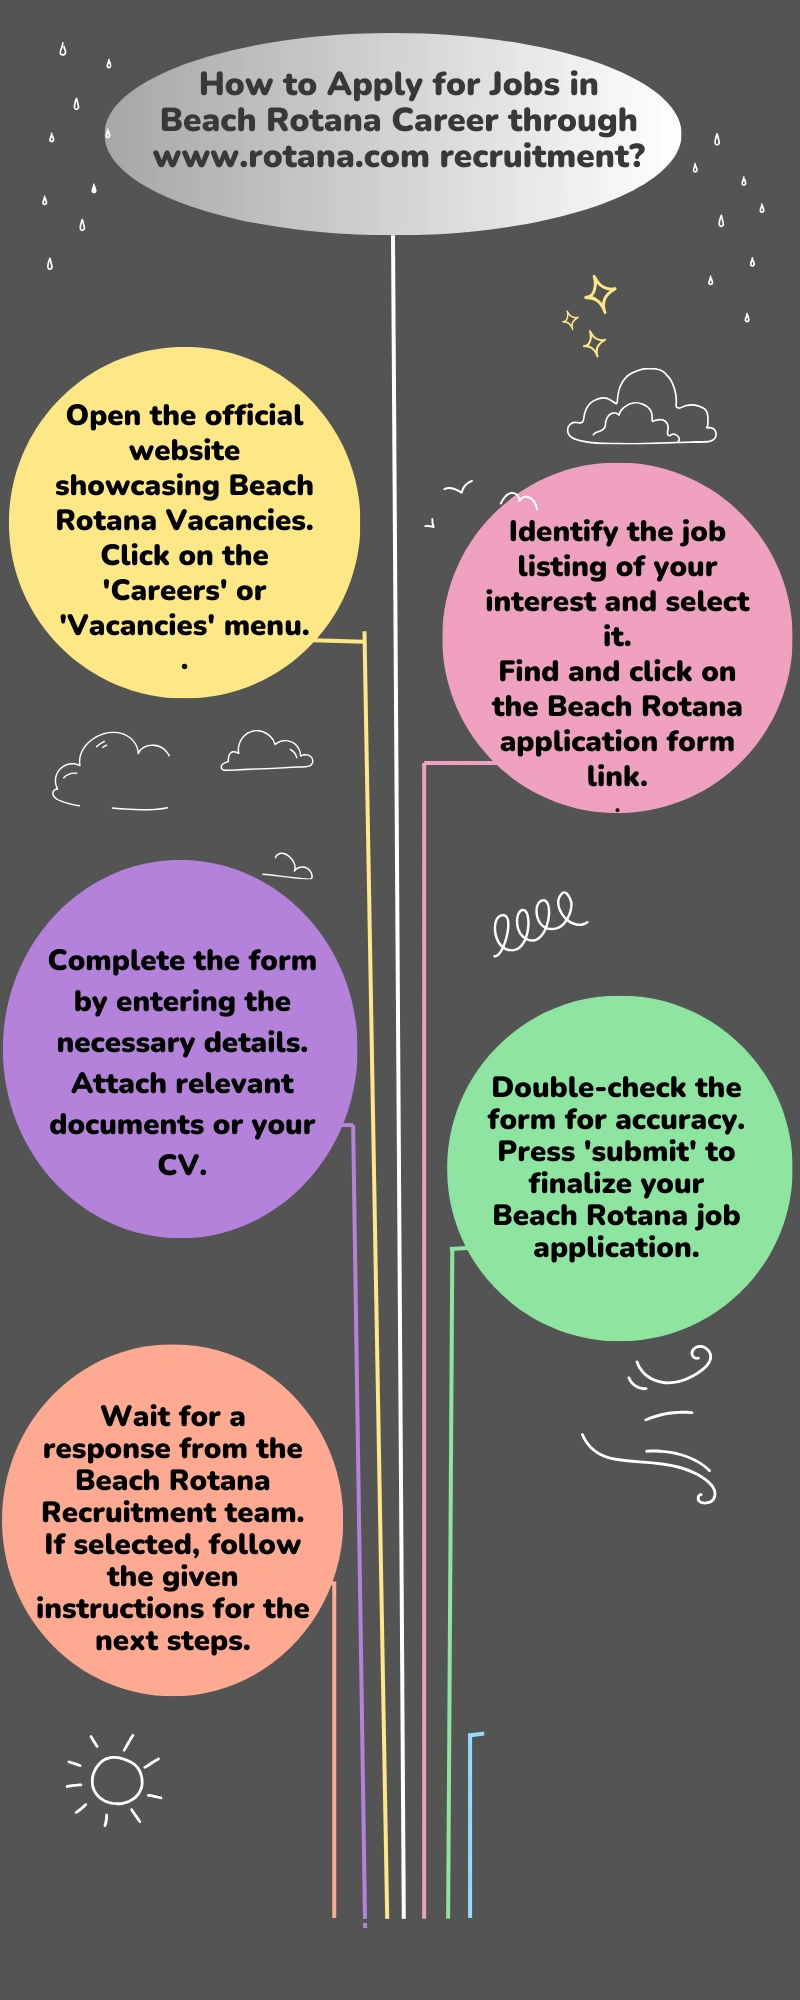 How to Apply for Jobs in Beach Rotana Career through www.rotana.com recruitment?